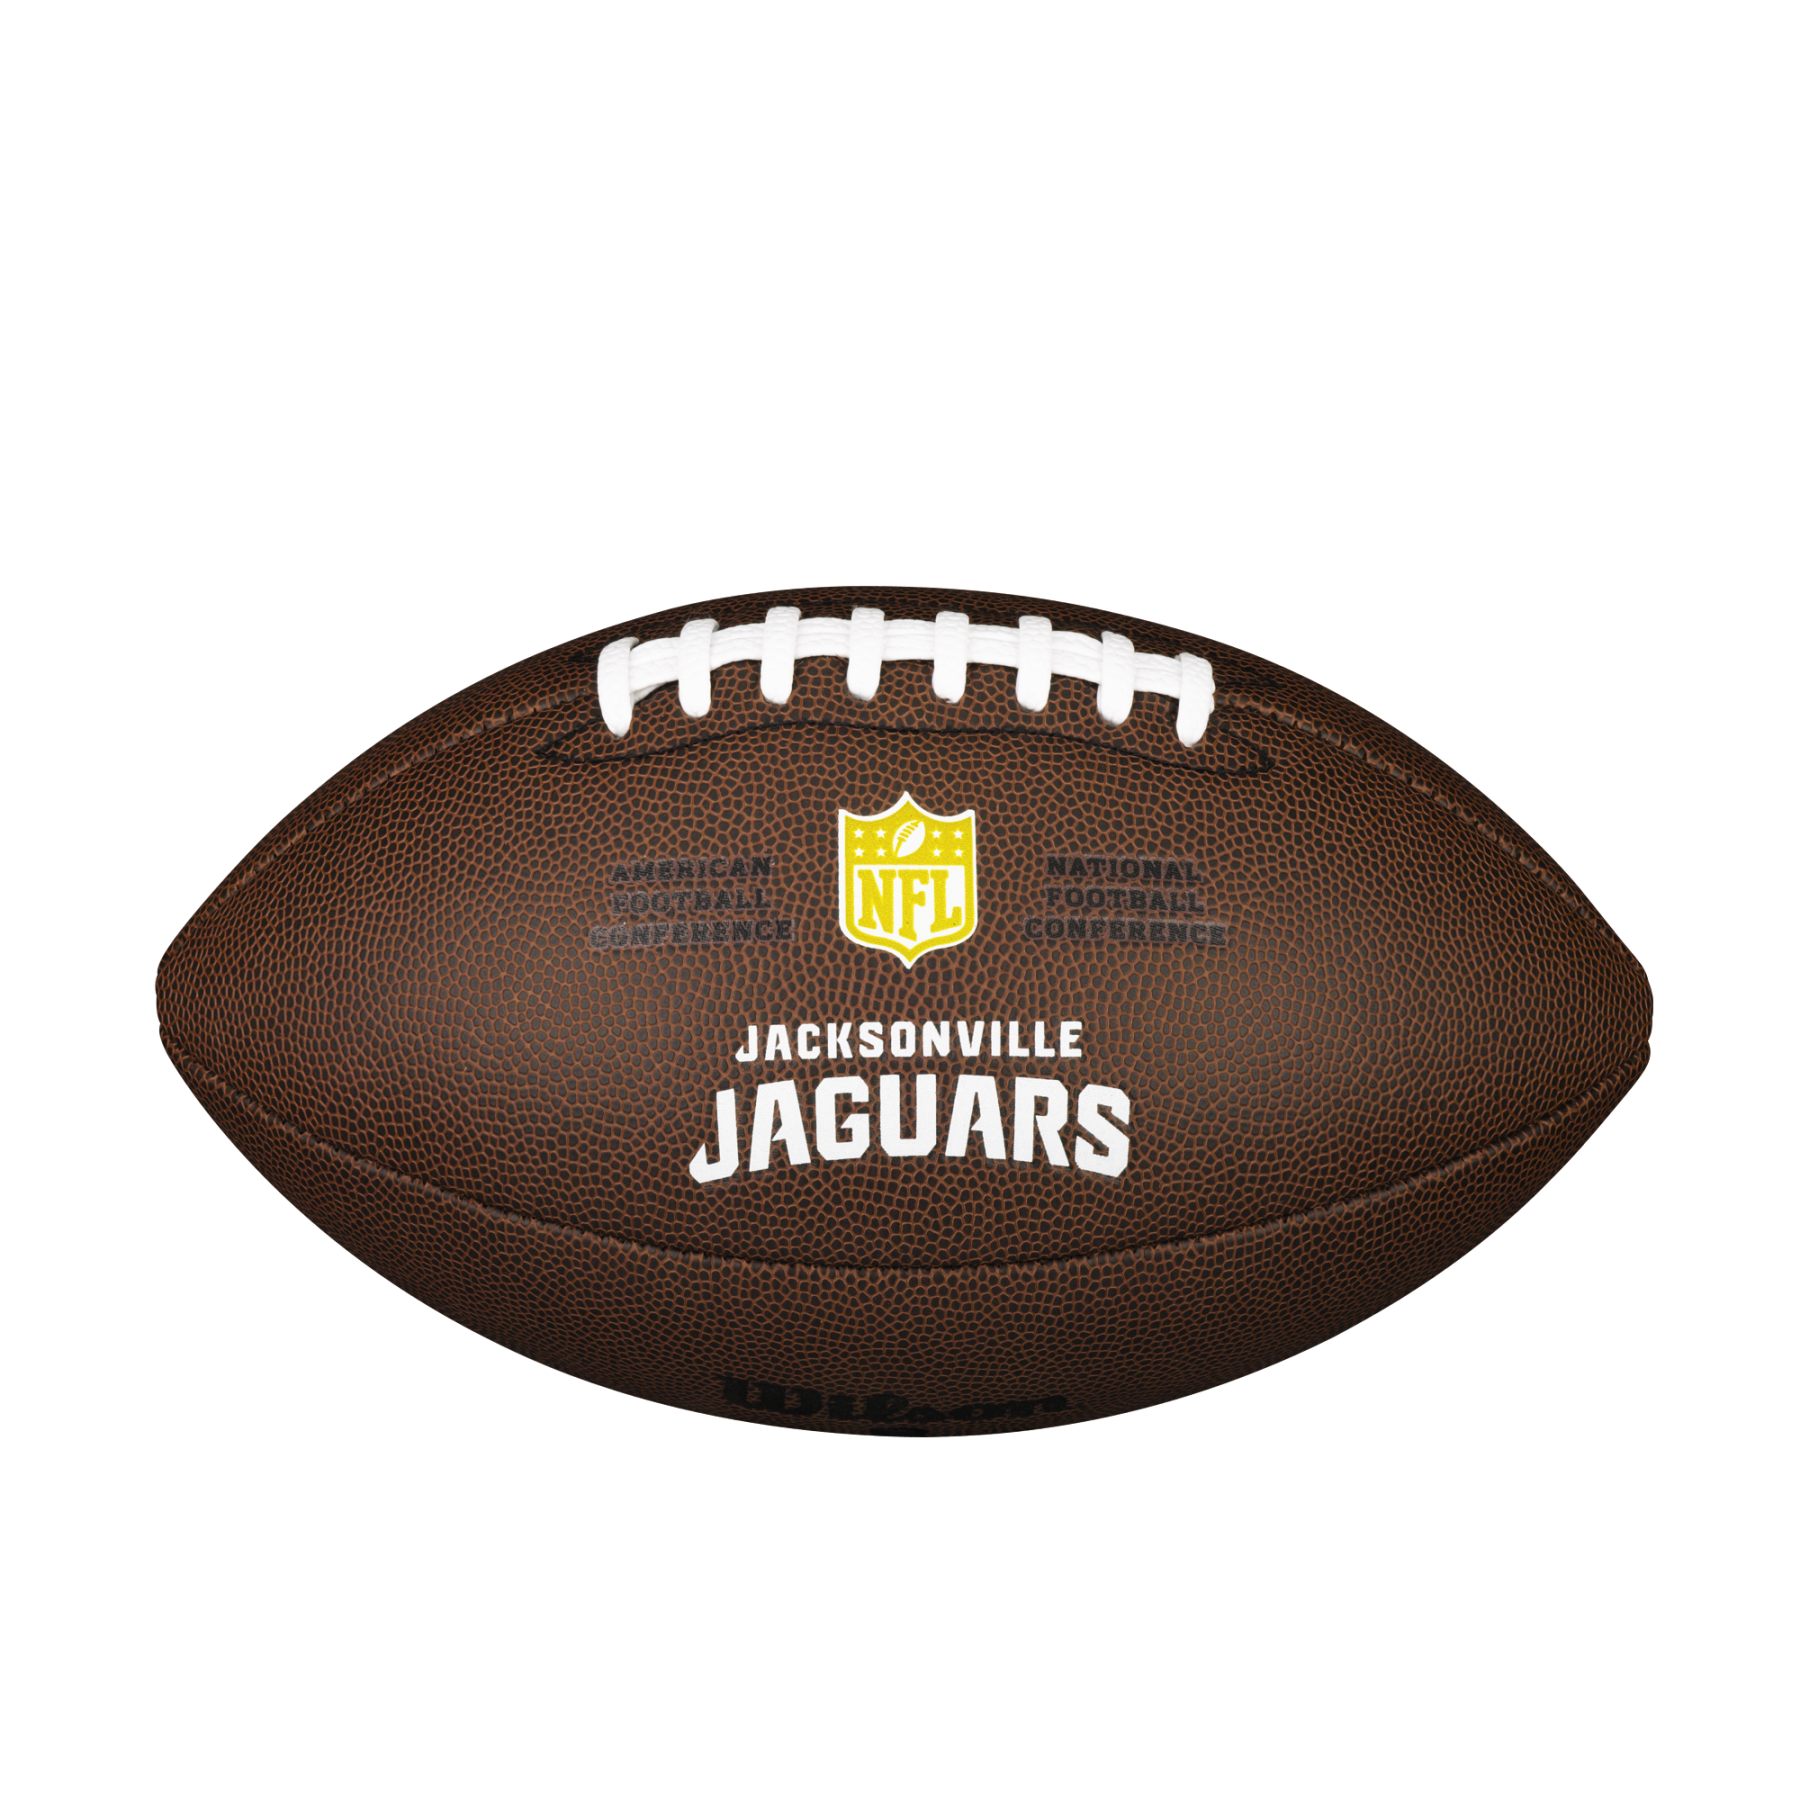 Bola Wilson Jaguars NFL com licença